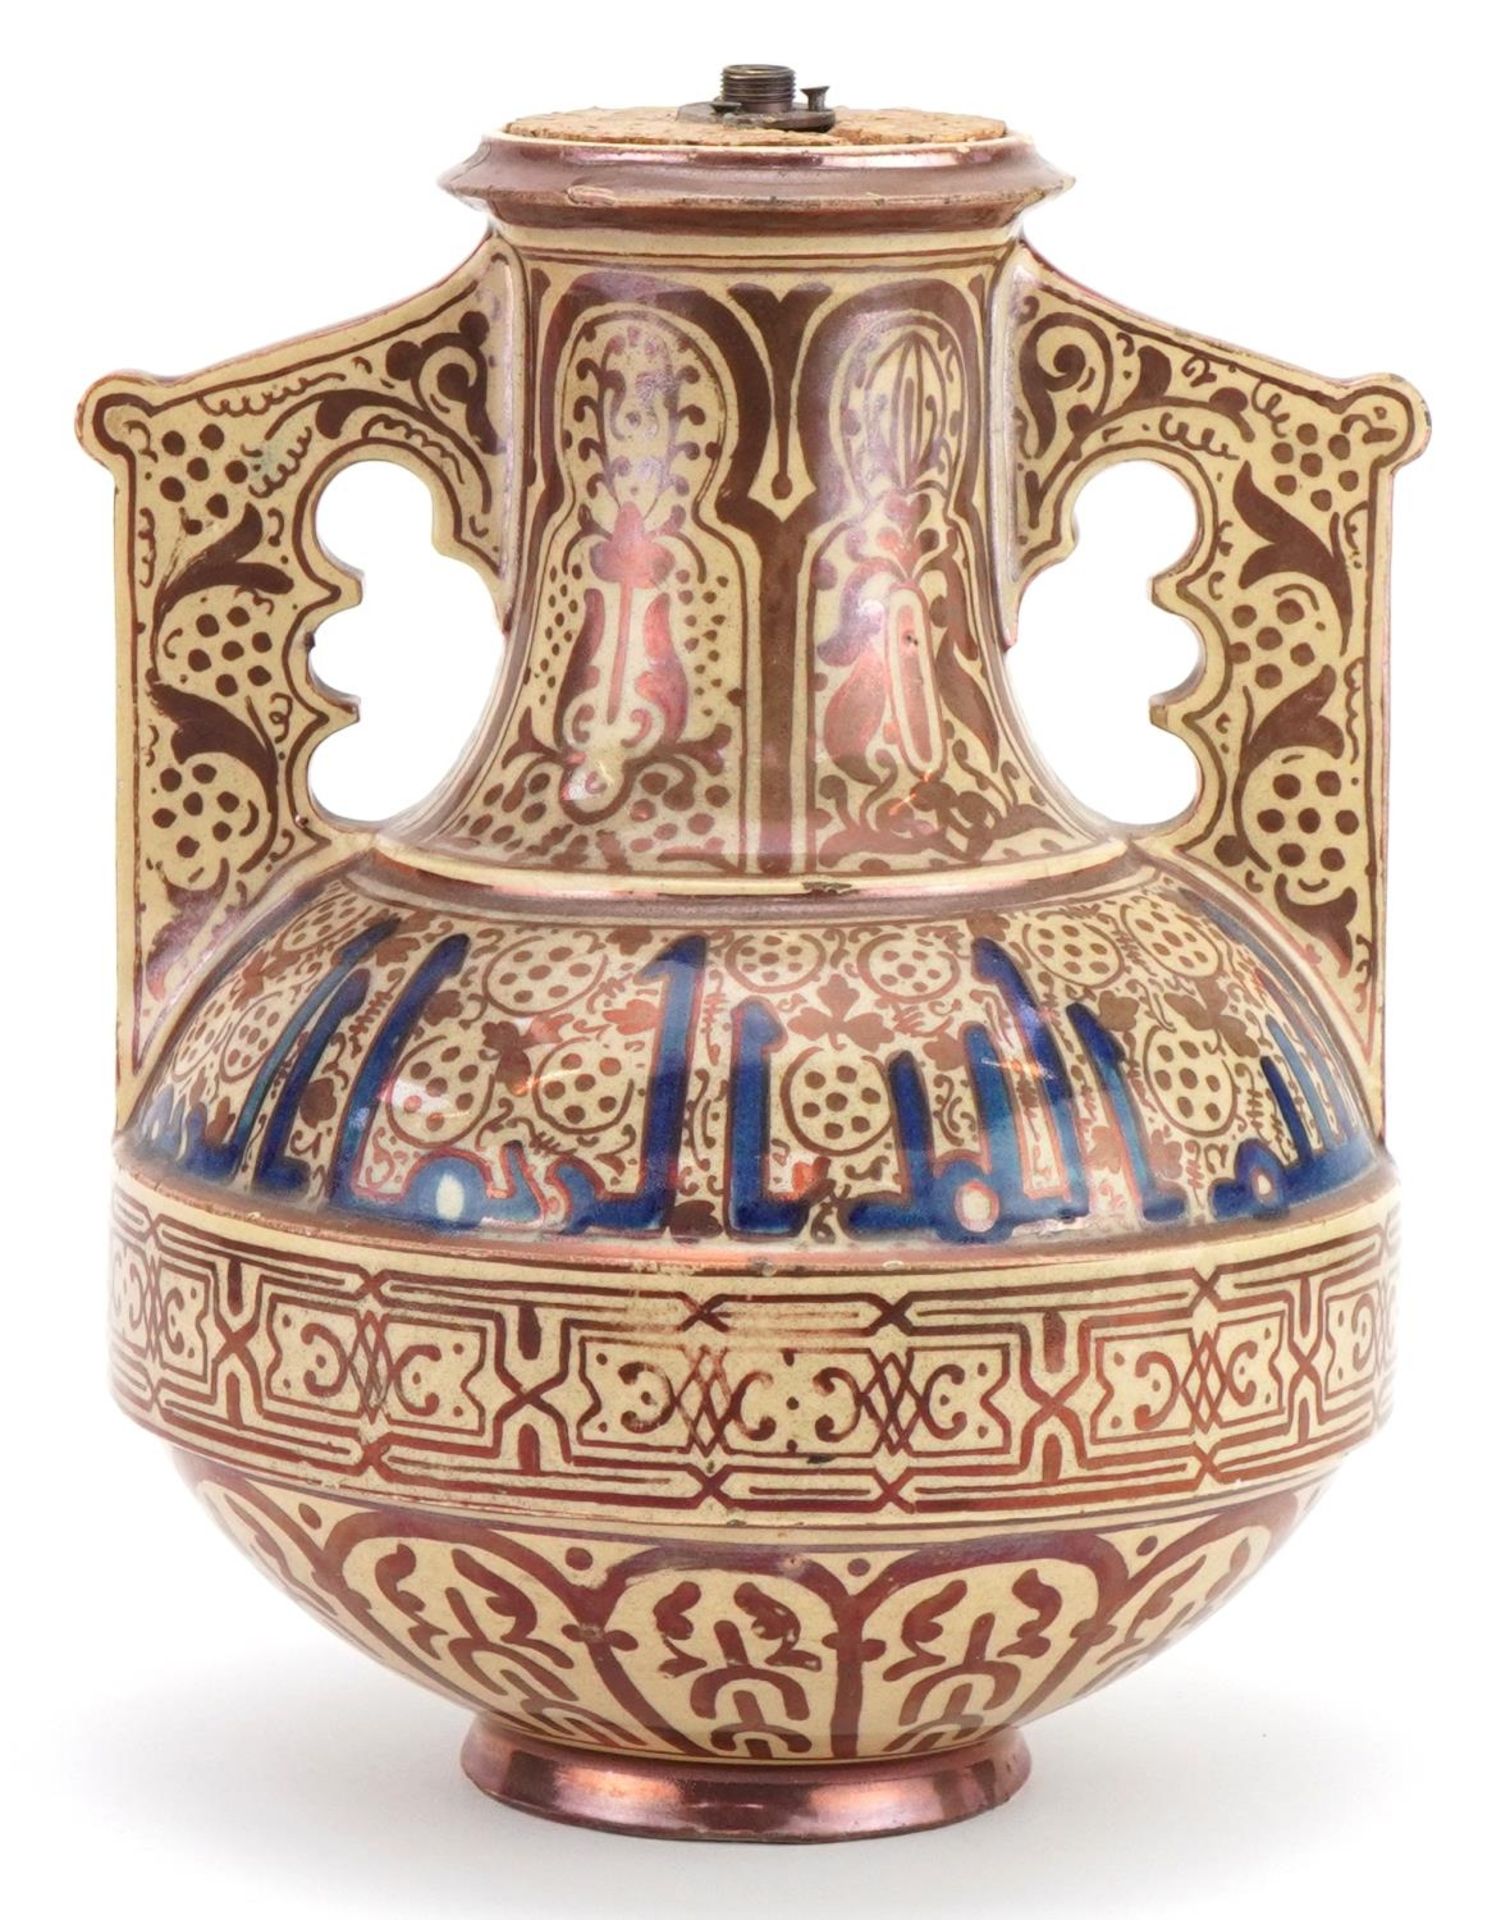 Hispano-Moresque, Antique Spanish lustre vase hand painted with stylised foliage and Islamic - Image 2 of 3